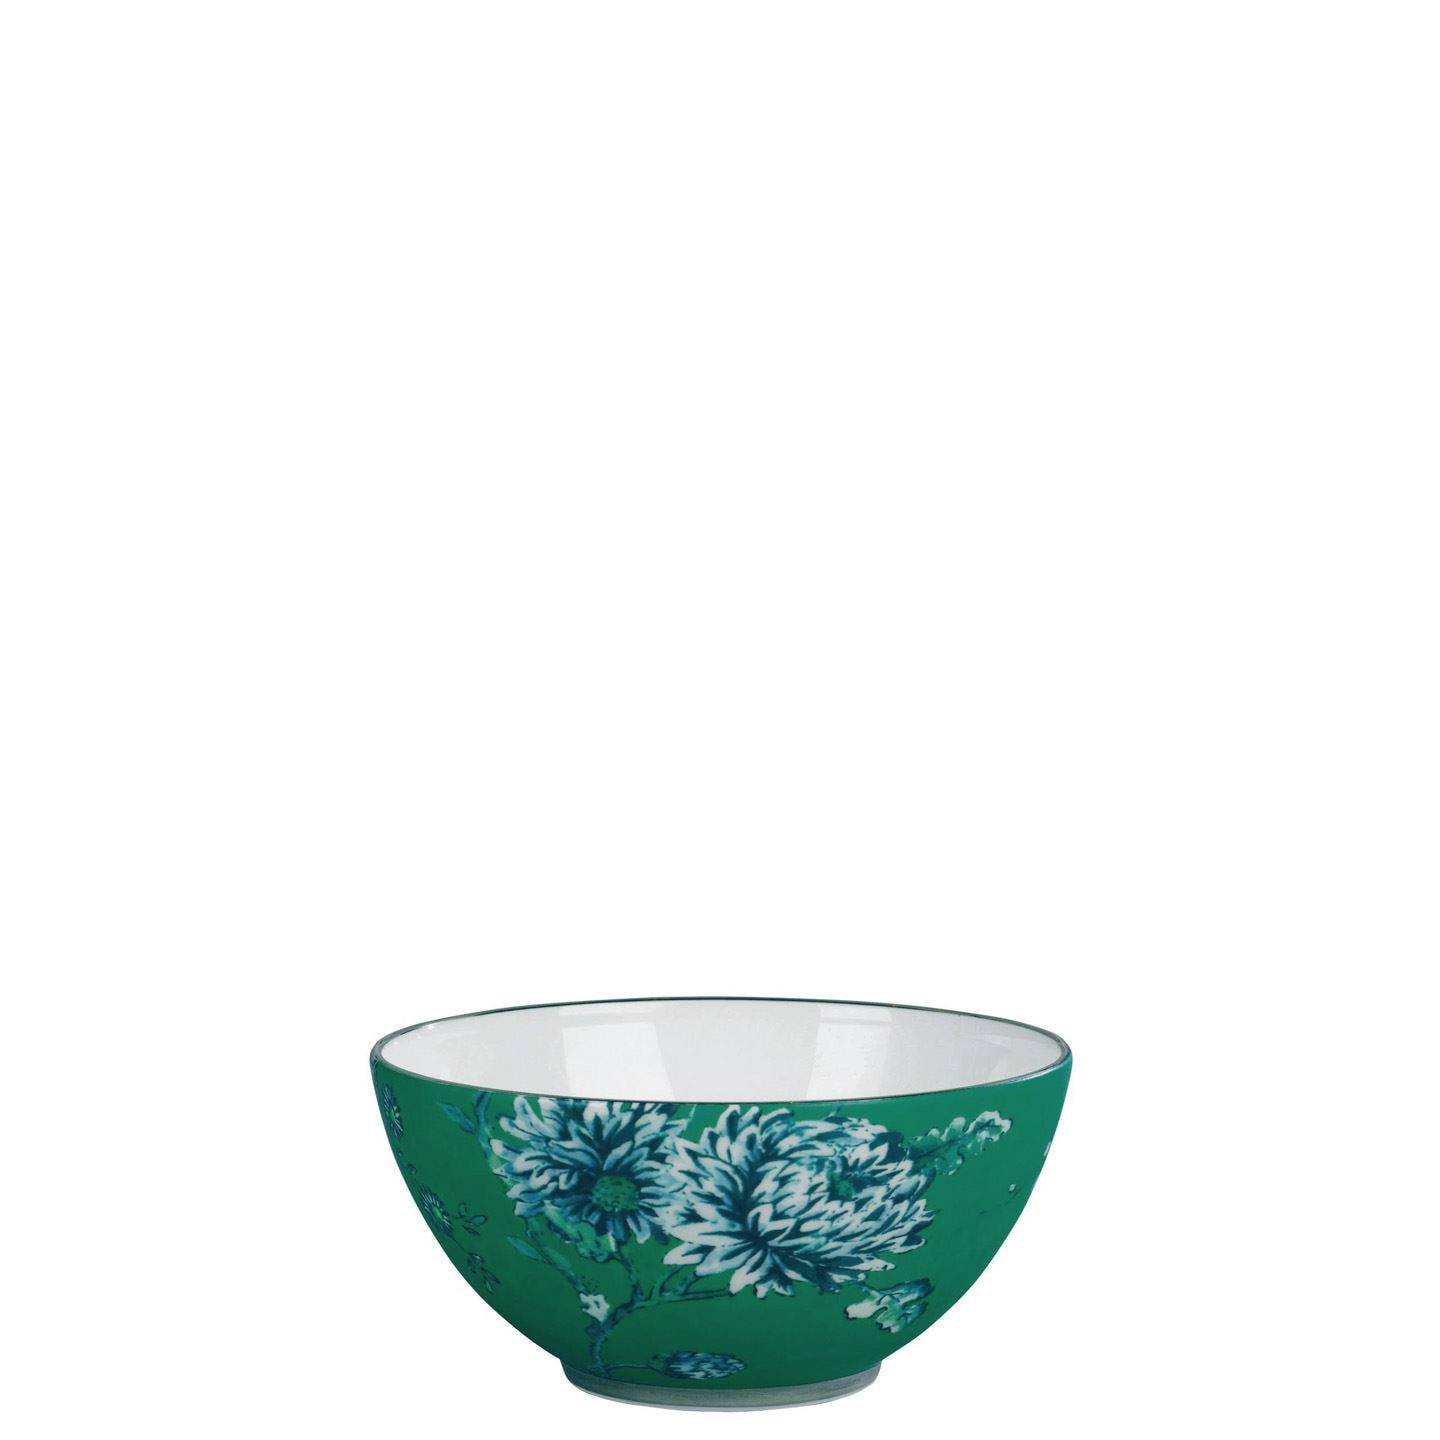 Wedgwood Jasper Conran Chinoiserie Green Gift Bowl 14cm